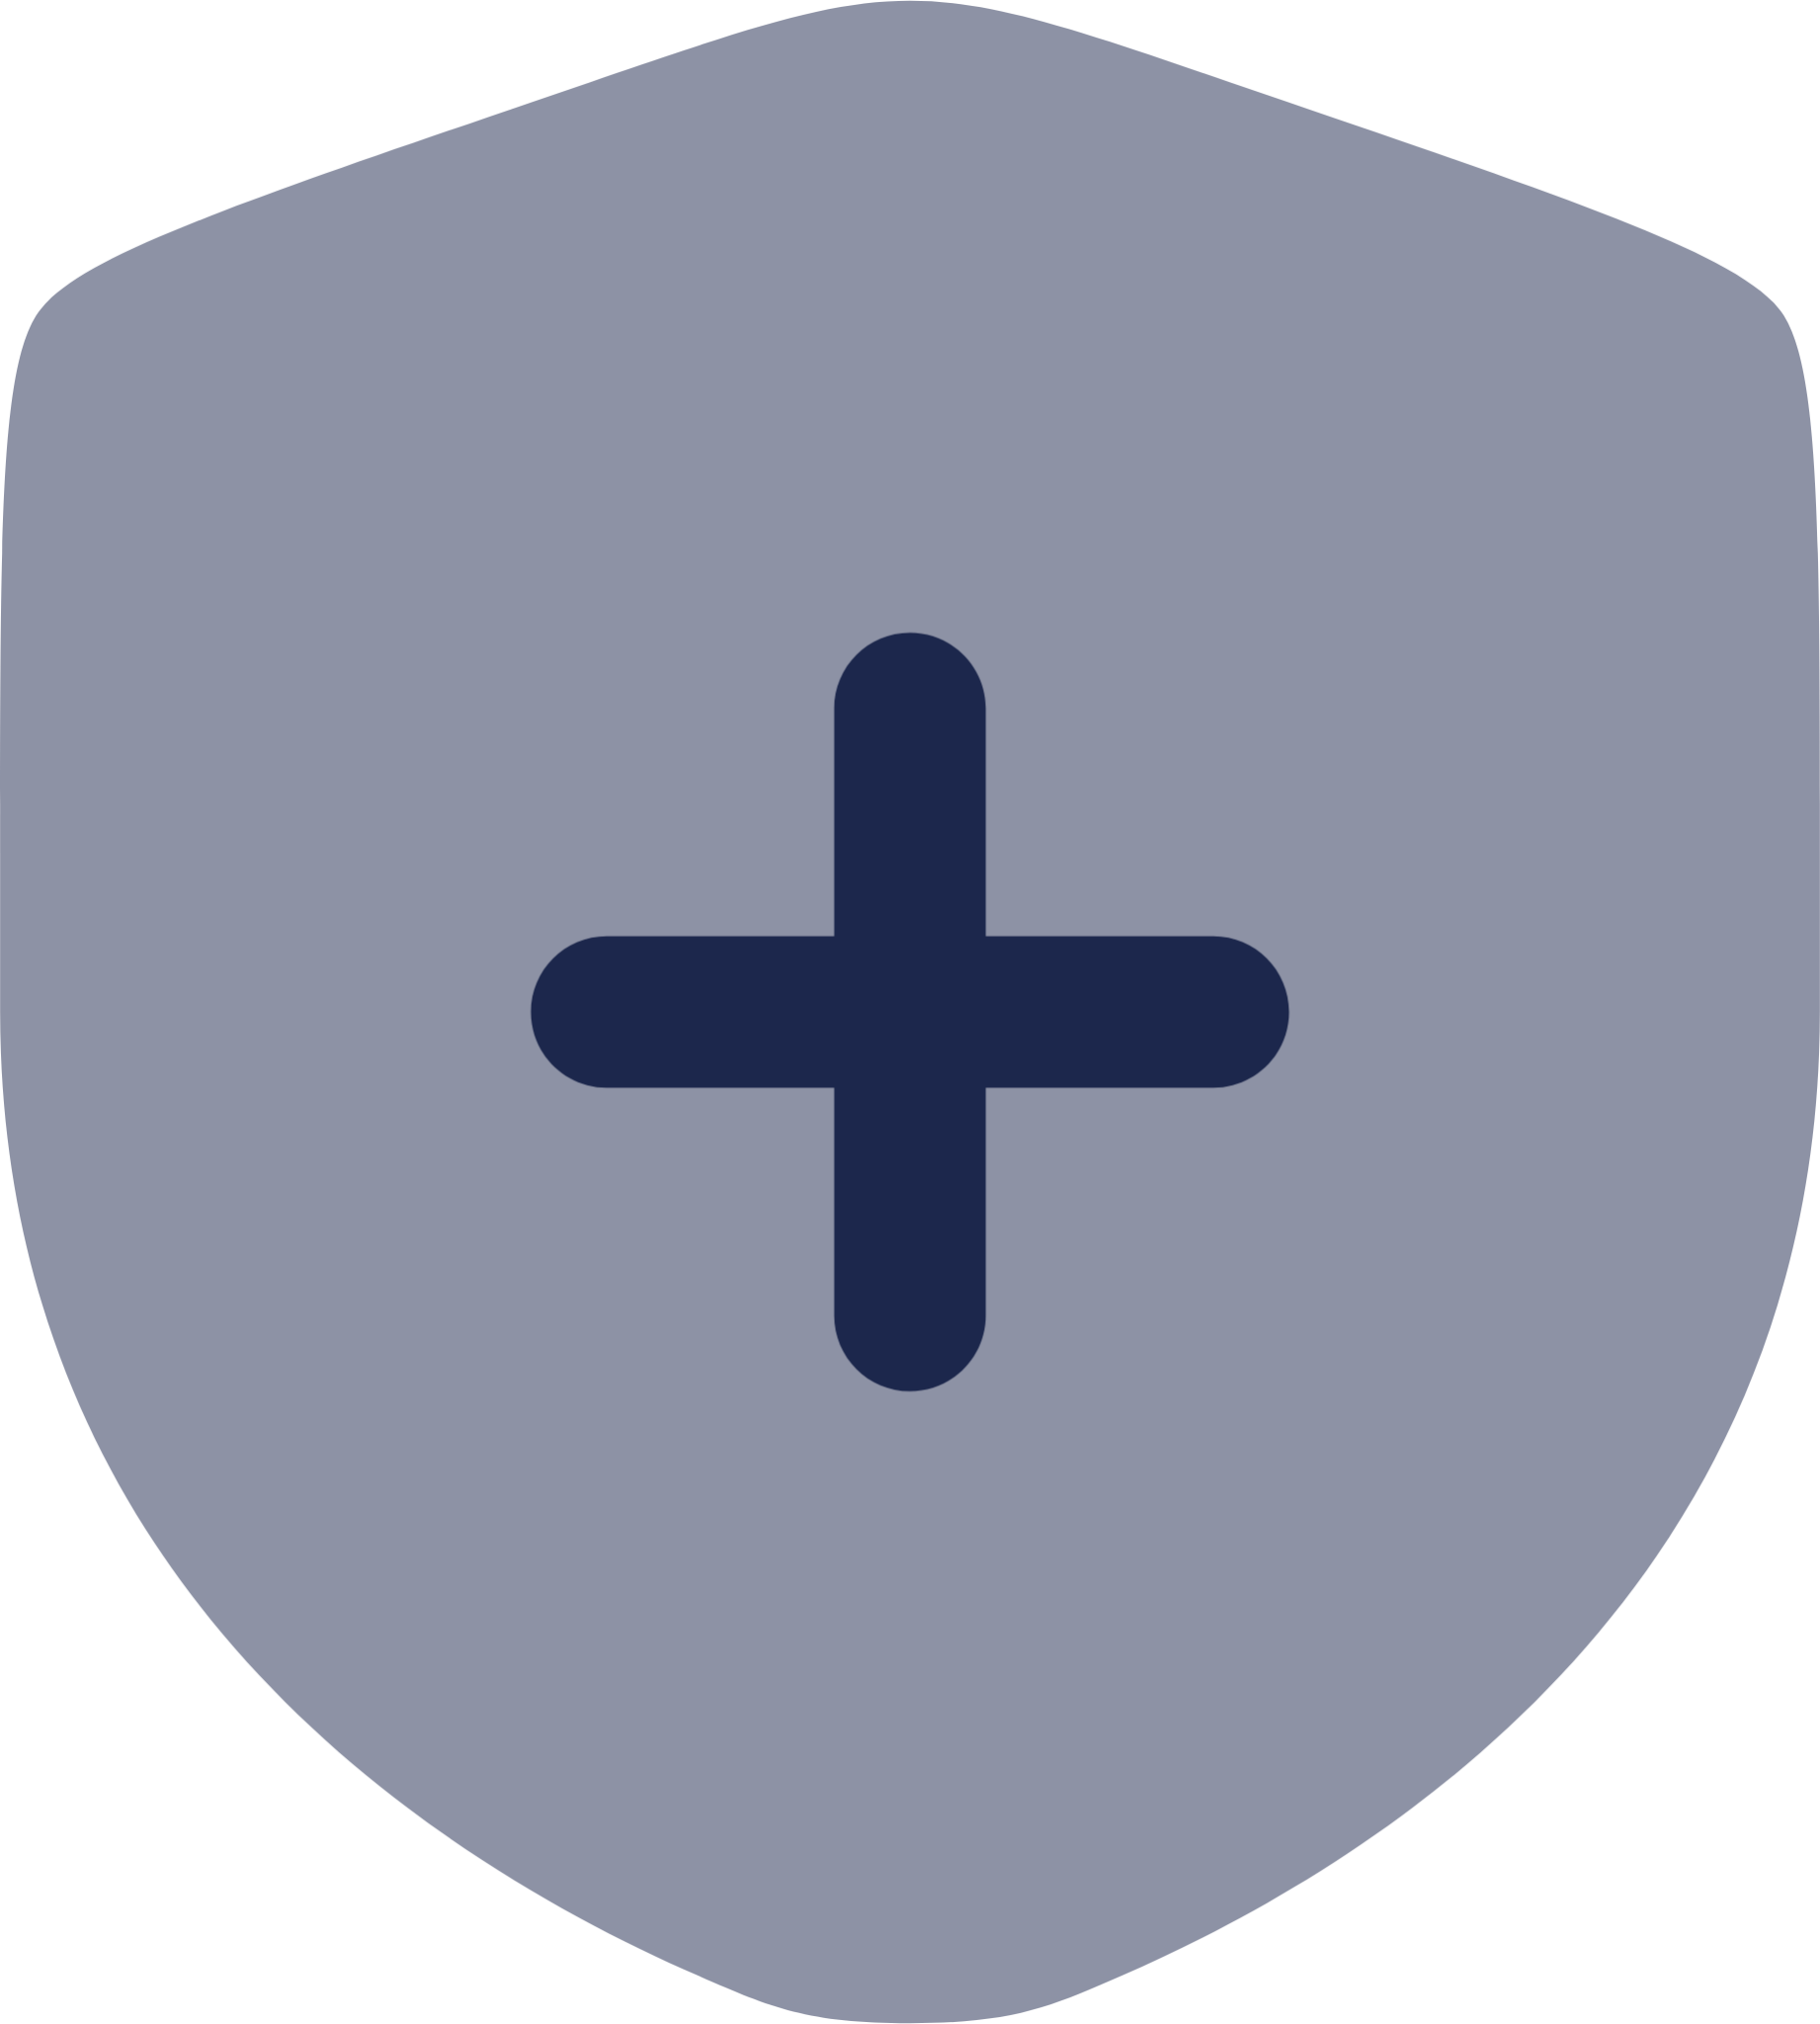 Shield Plus icon